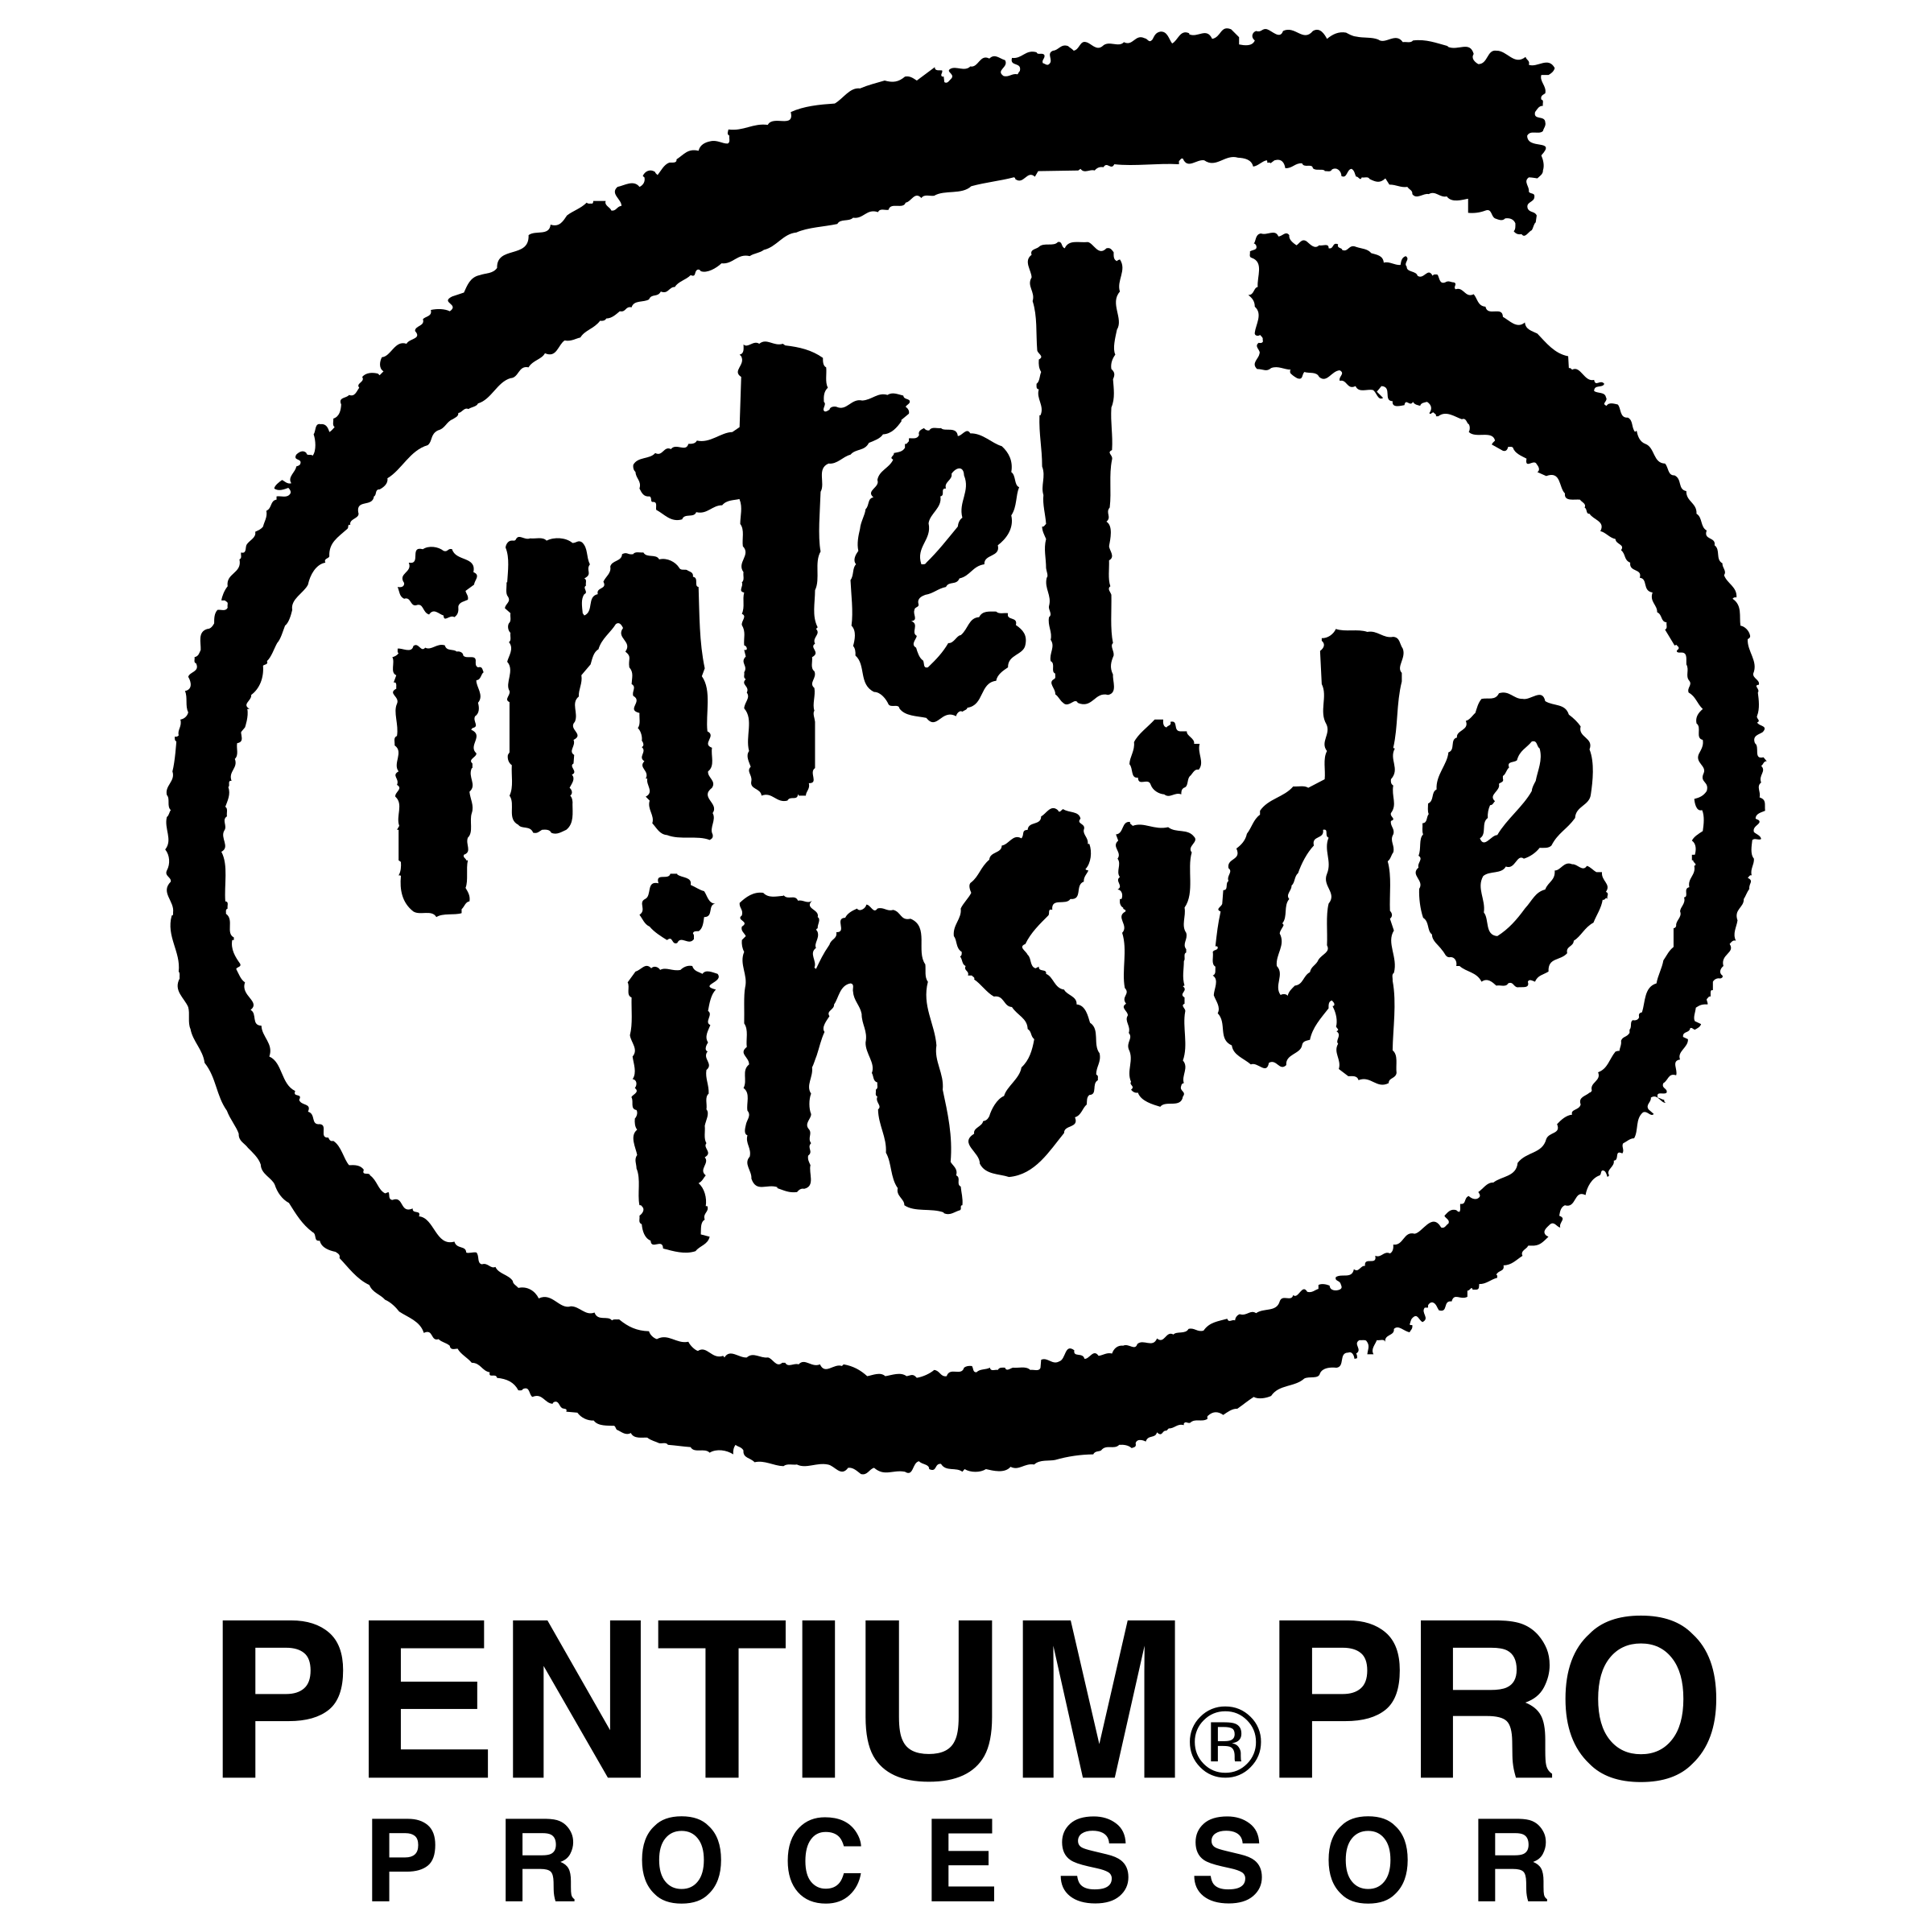 Intel Pentium Processor Logo - Pentium Pro Processor Logo PNG Transparent & SVG Vector - Freebie Supply